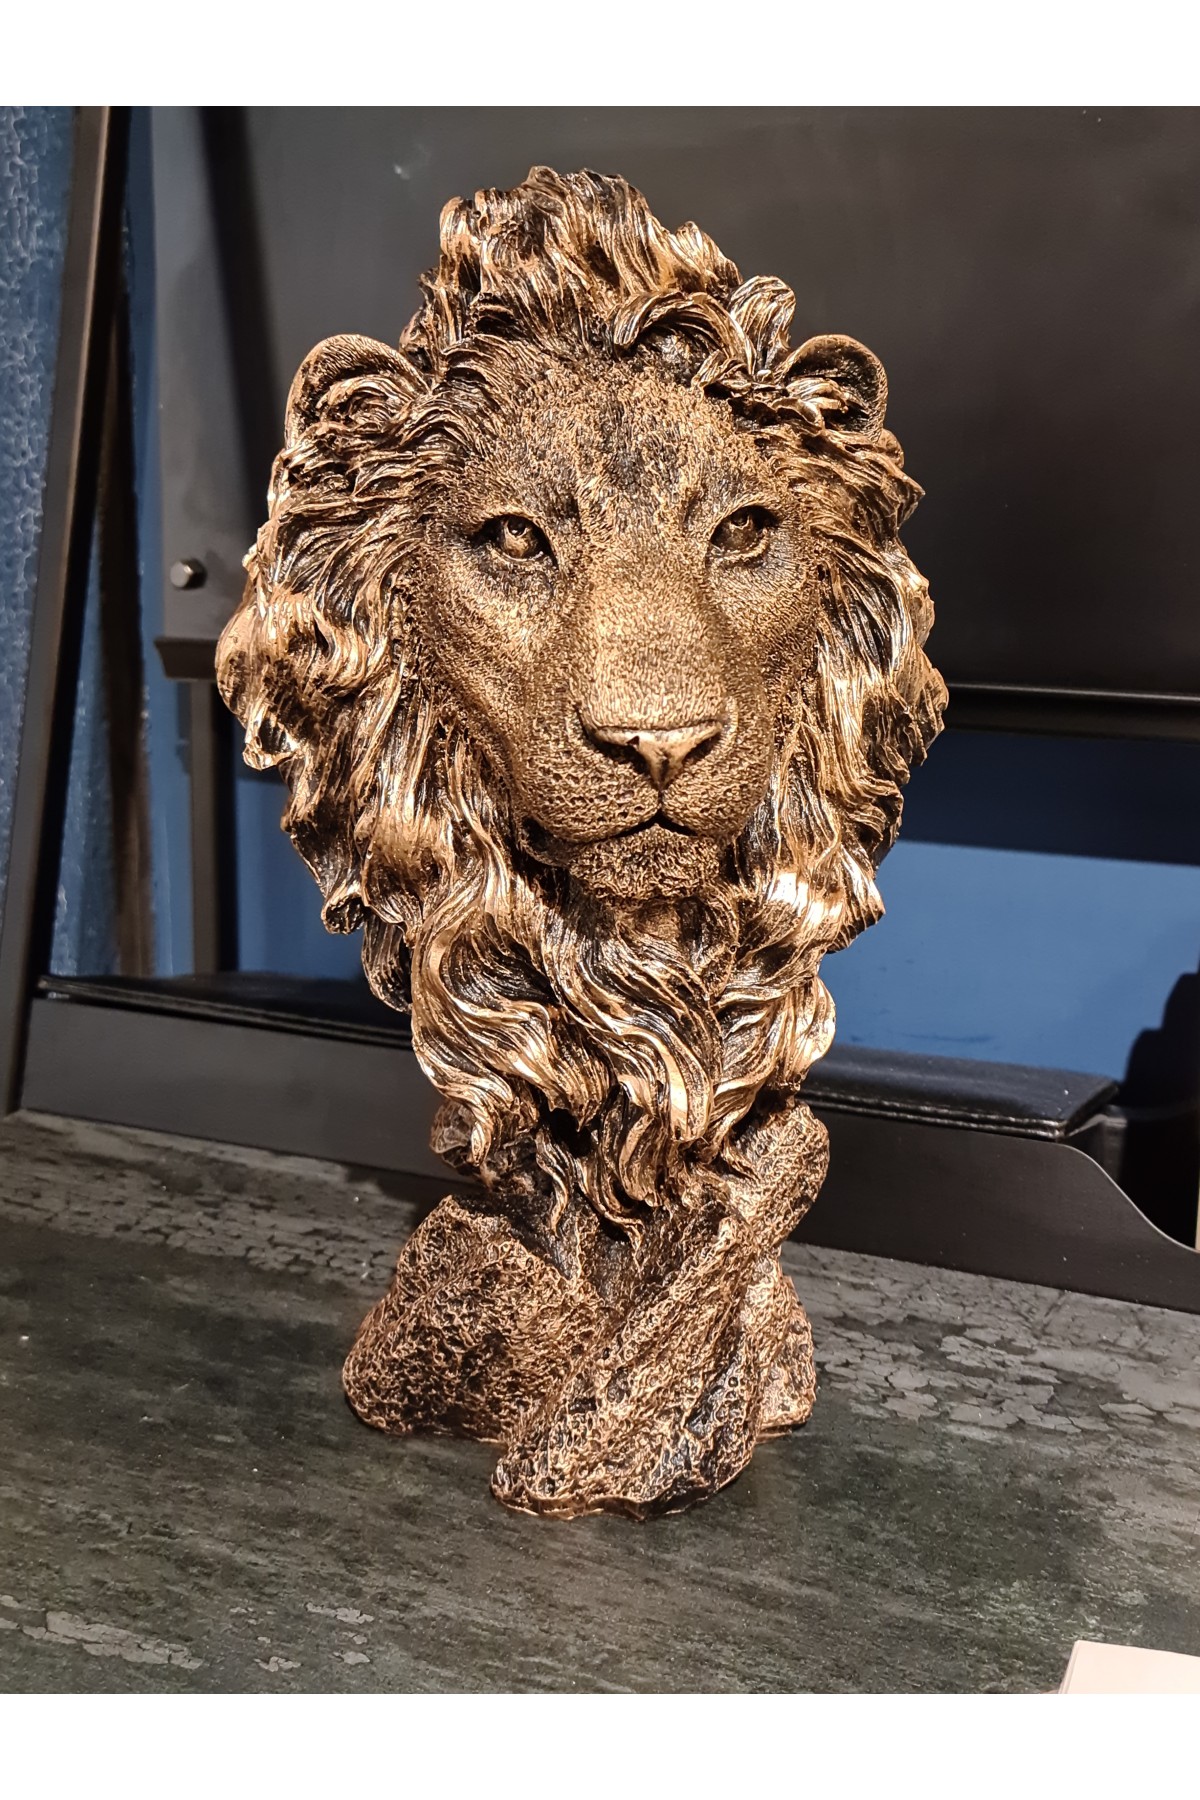 Decorative Lion Head Super Reality gift trinket